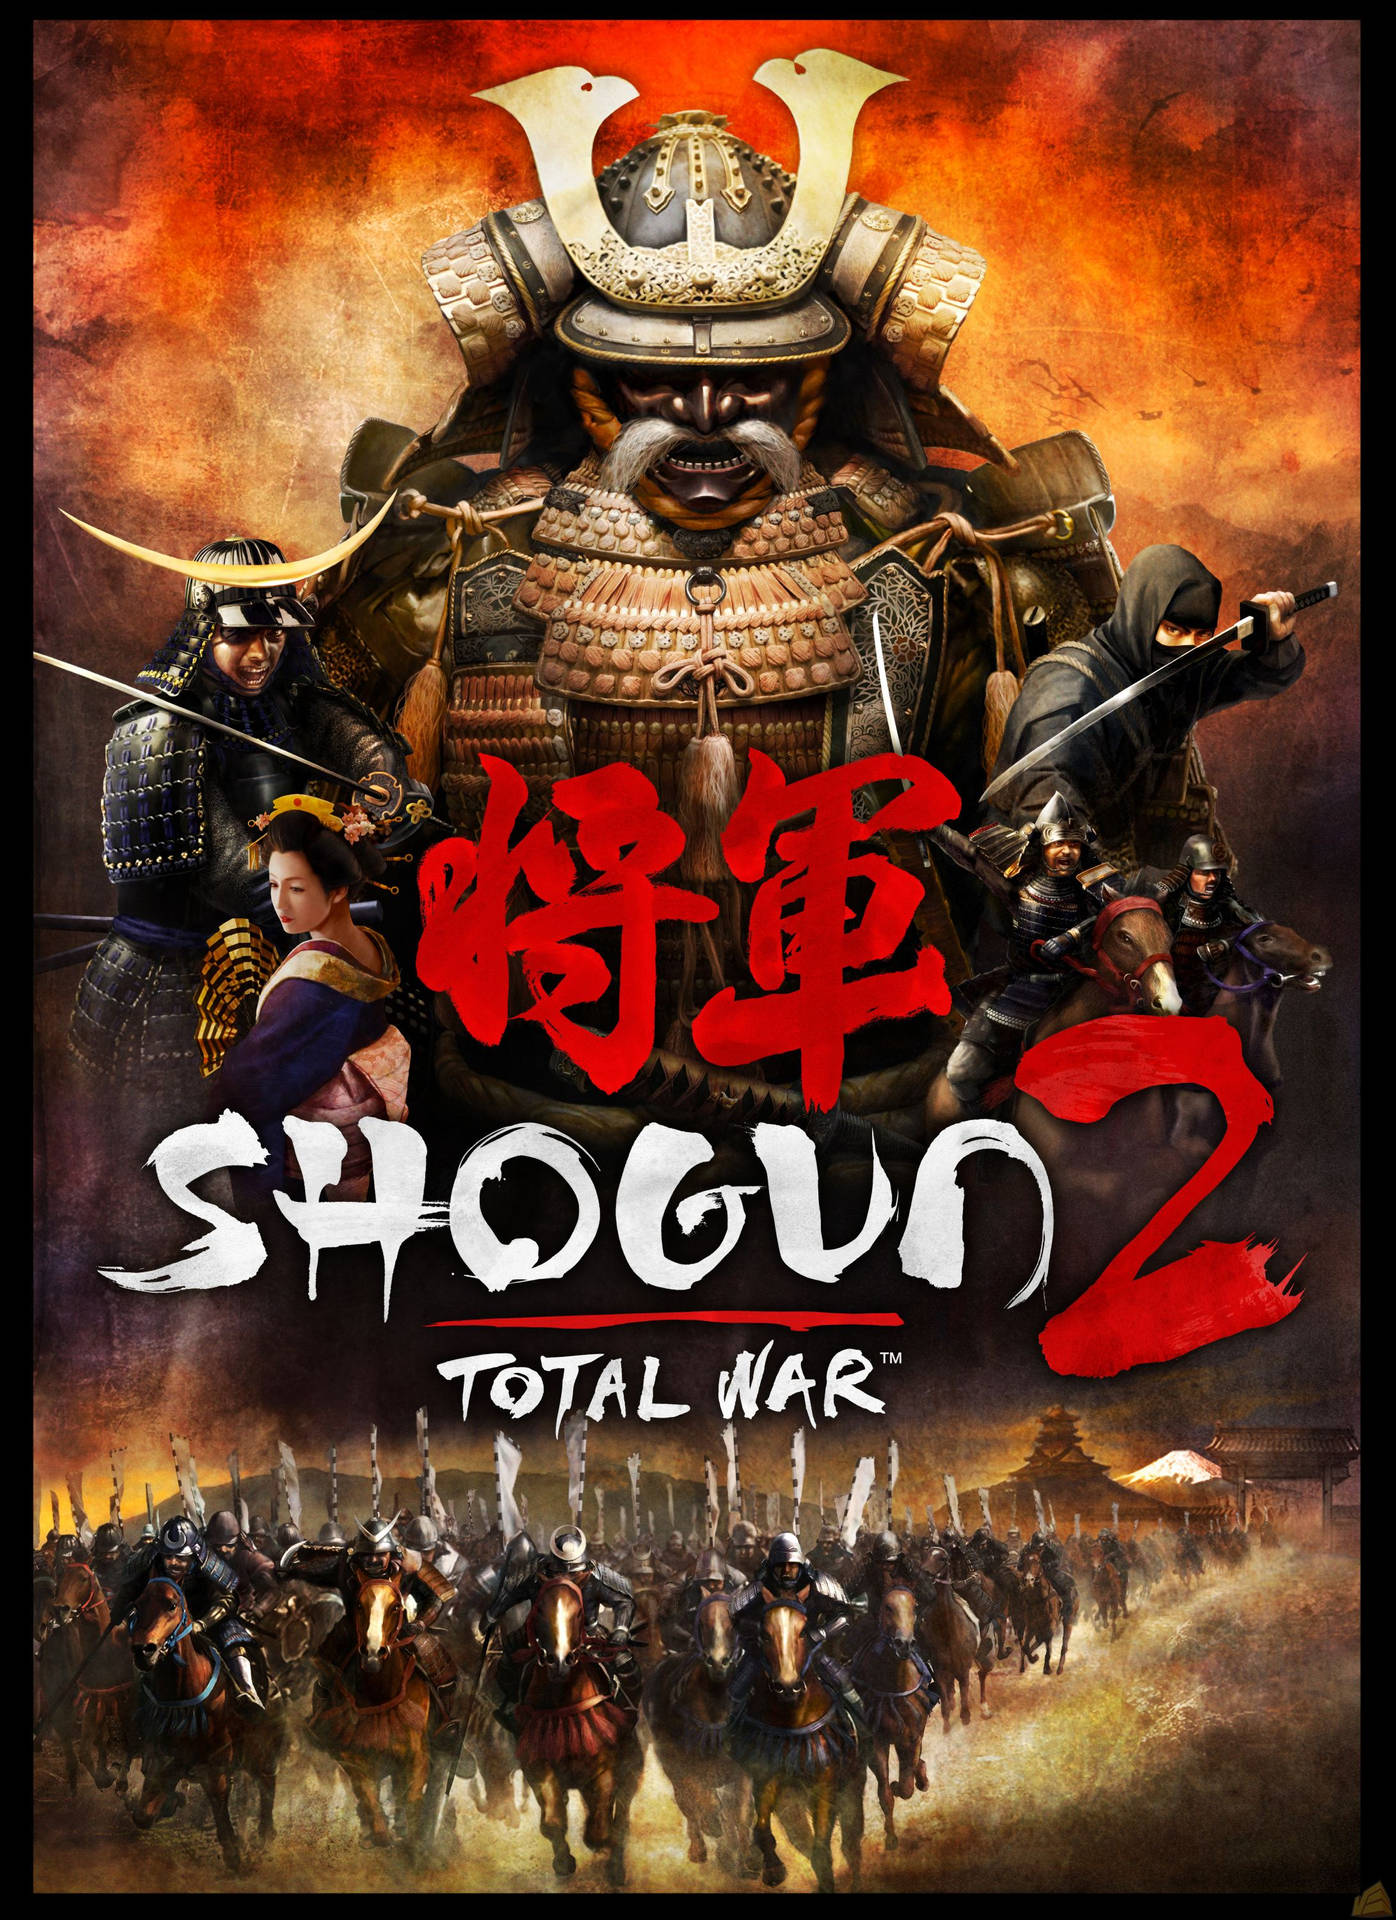 Shogun 2 Total War Game Poster